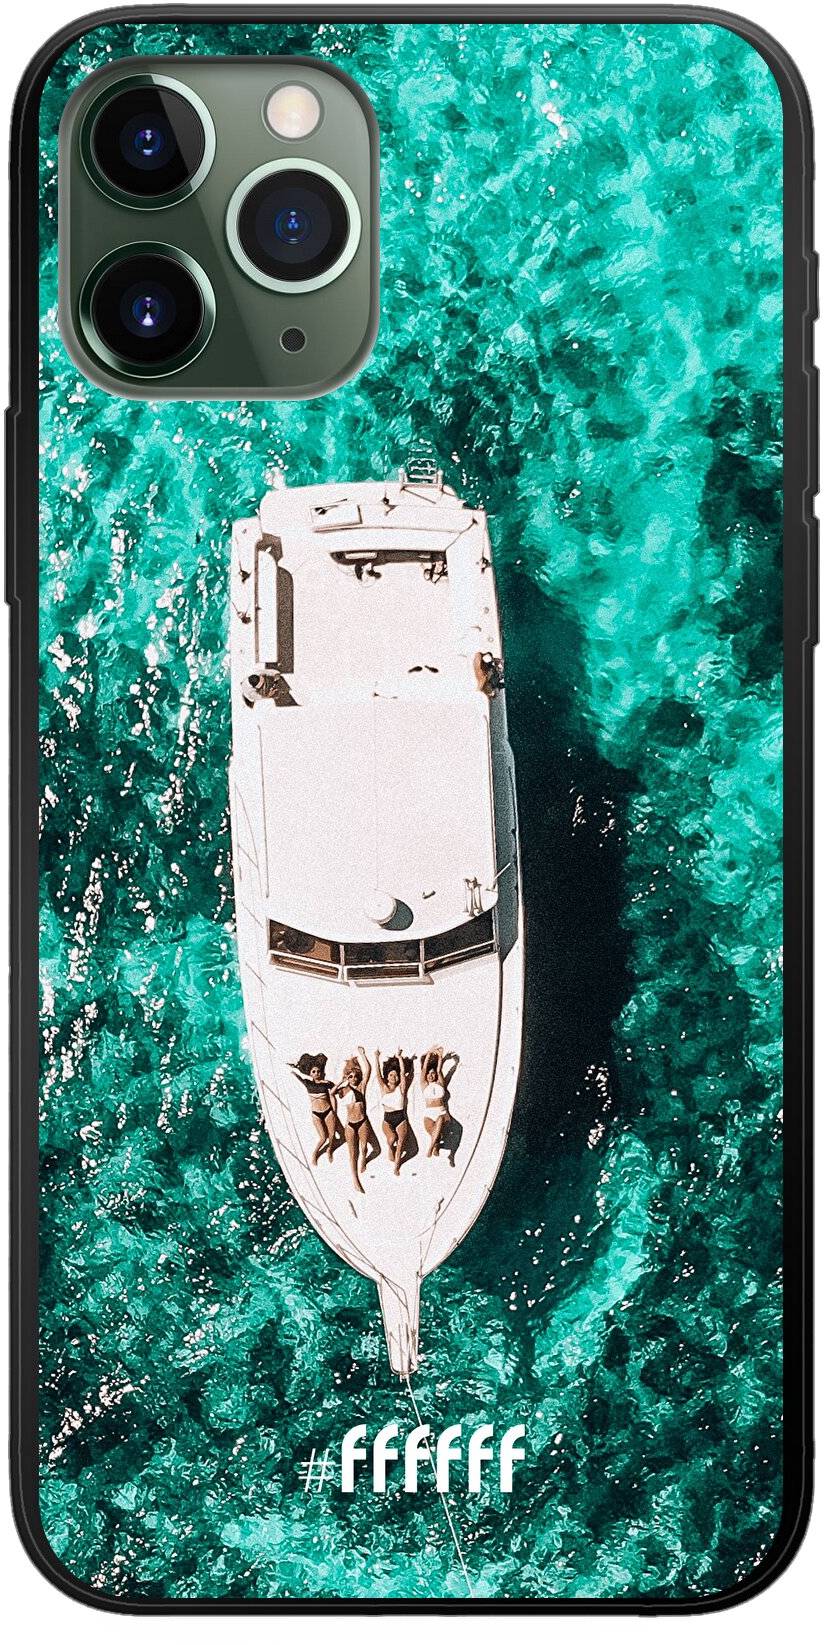 Yacht Life iPhone 11 Pro